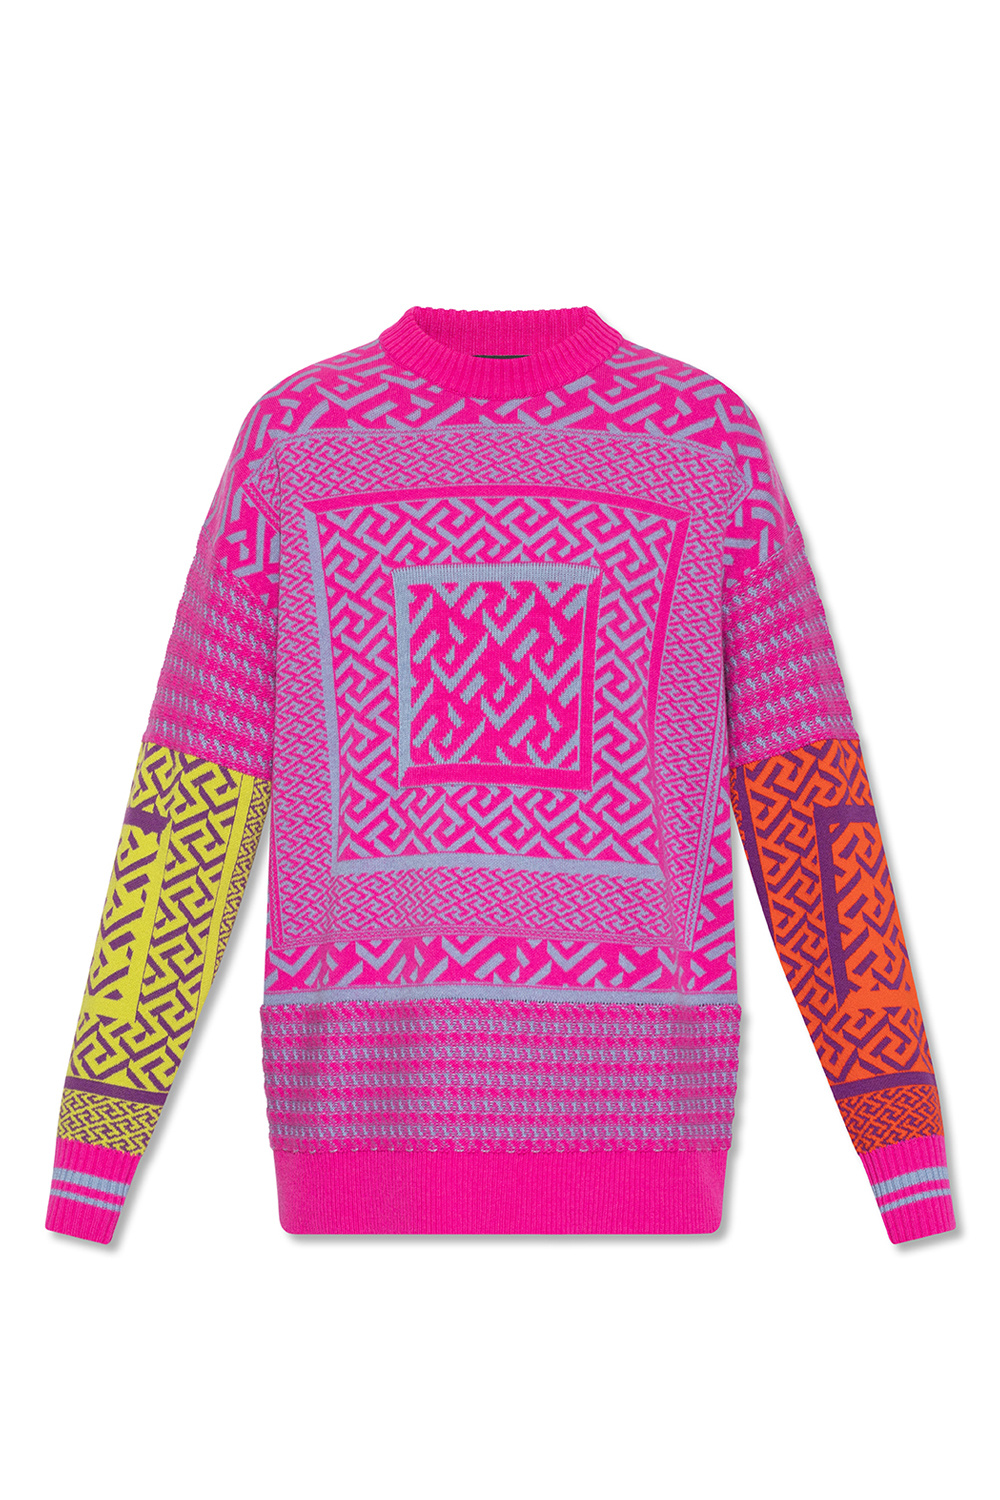 Versace sweater silk with ‘La Greca’ pattern